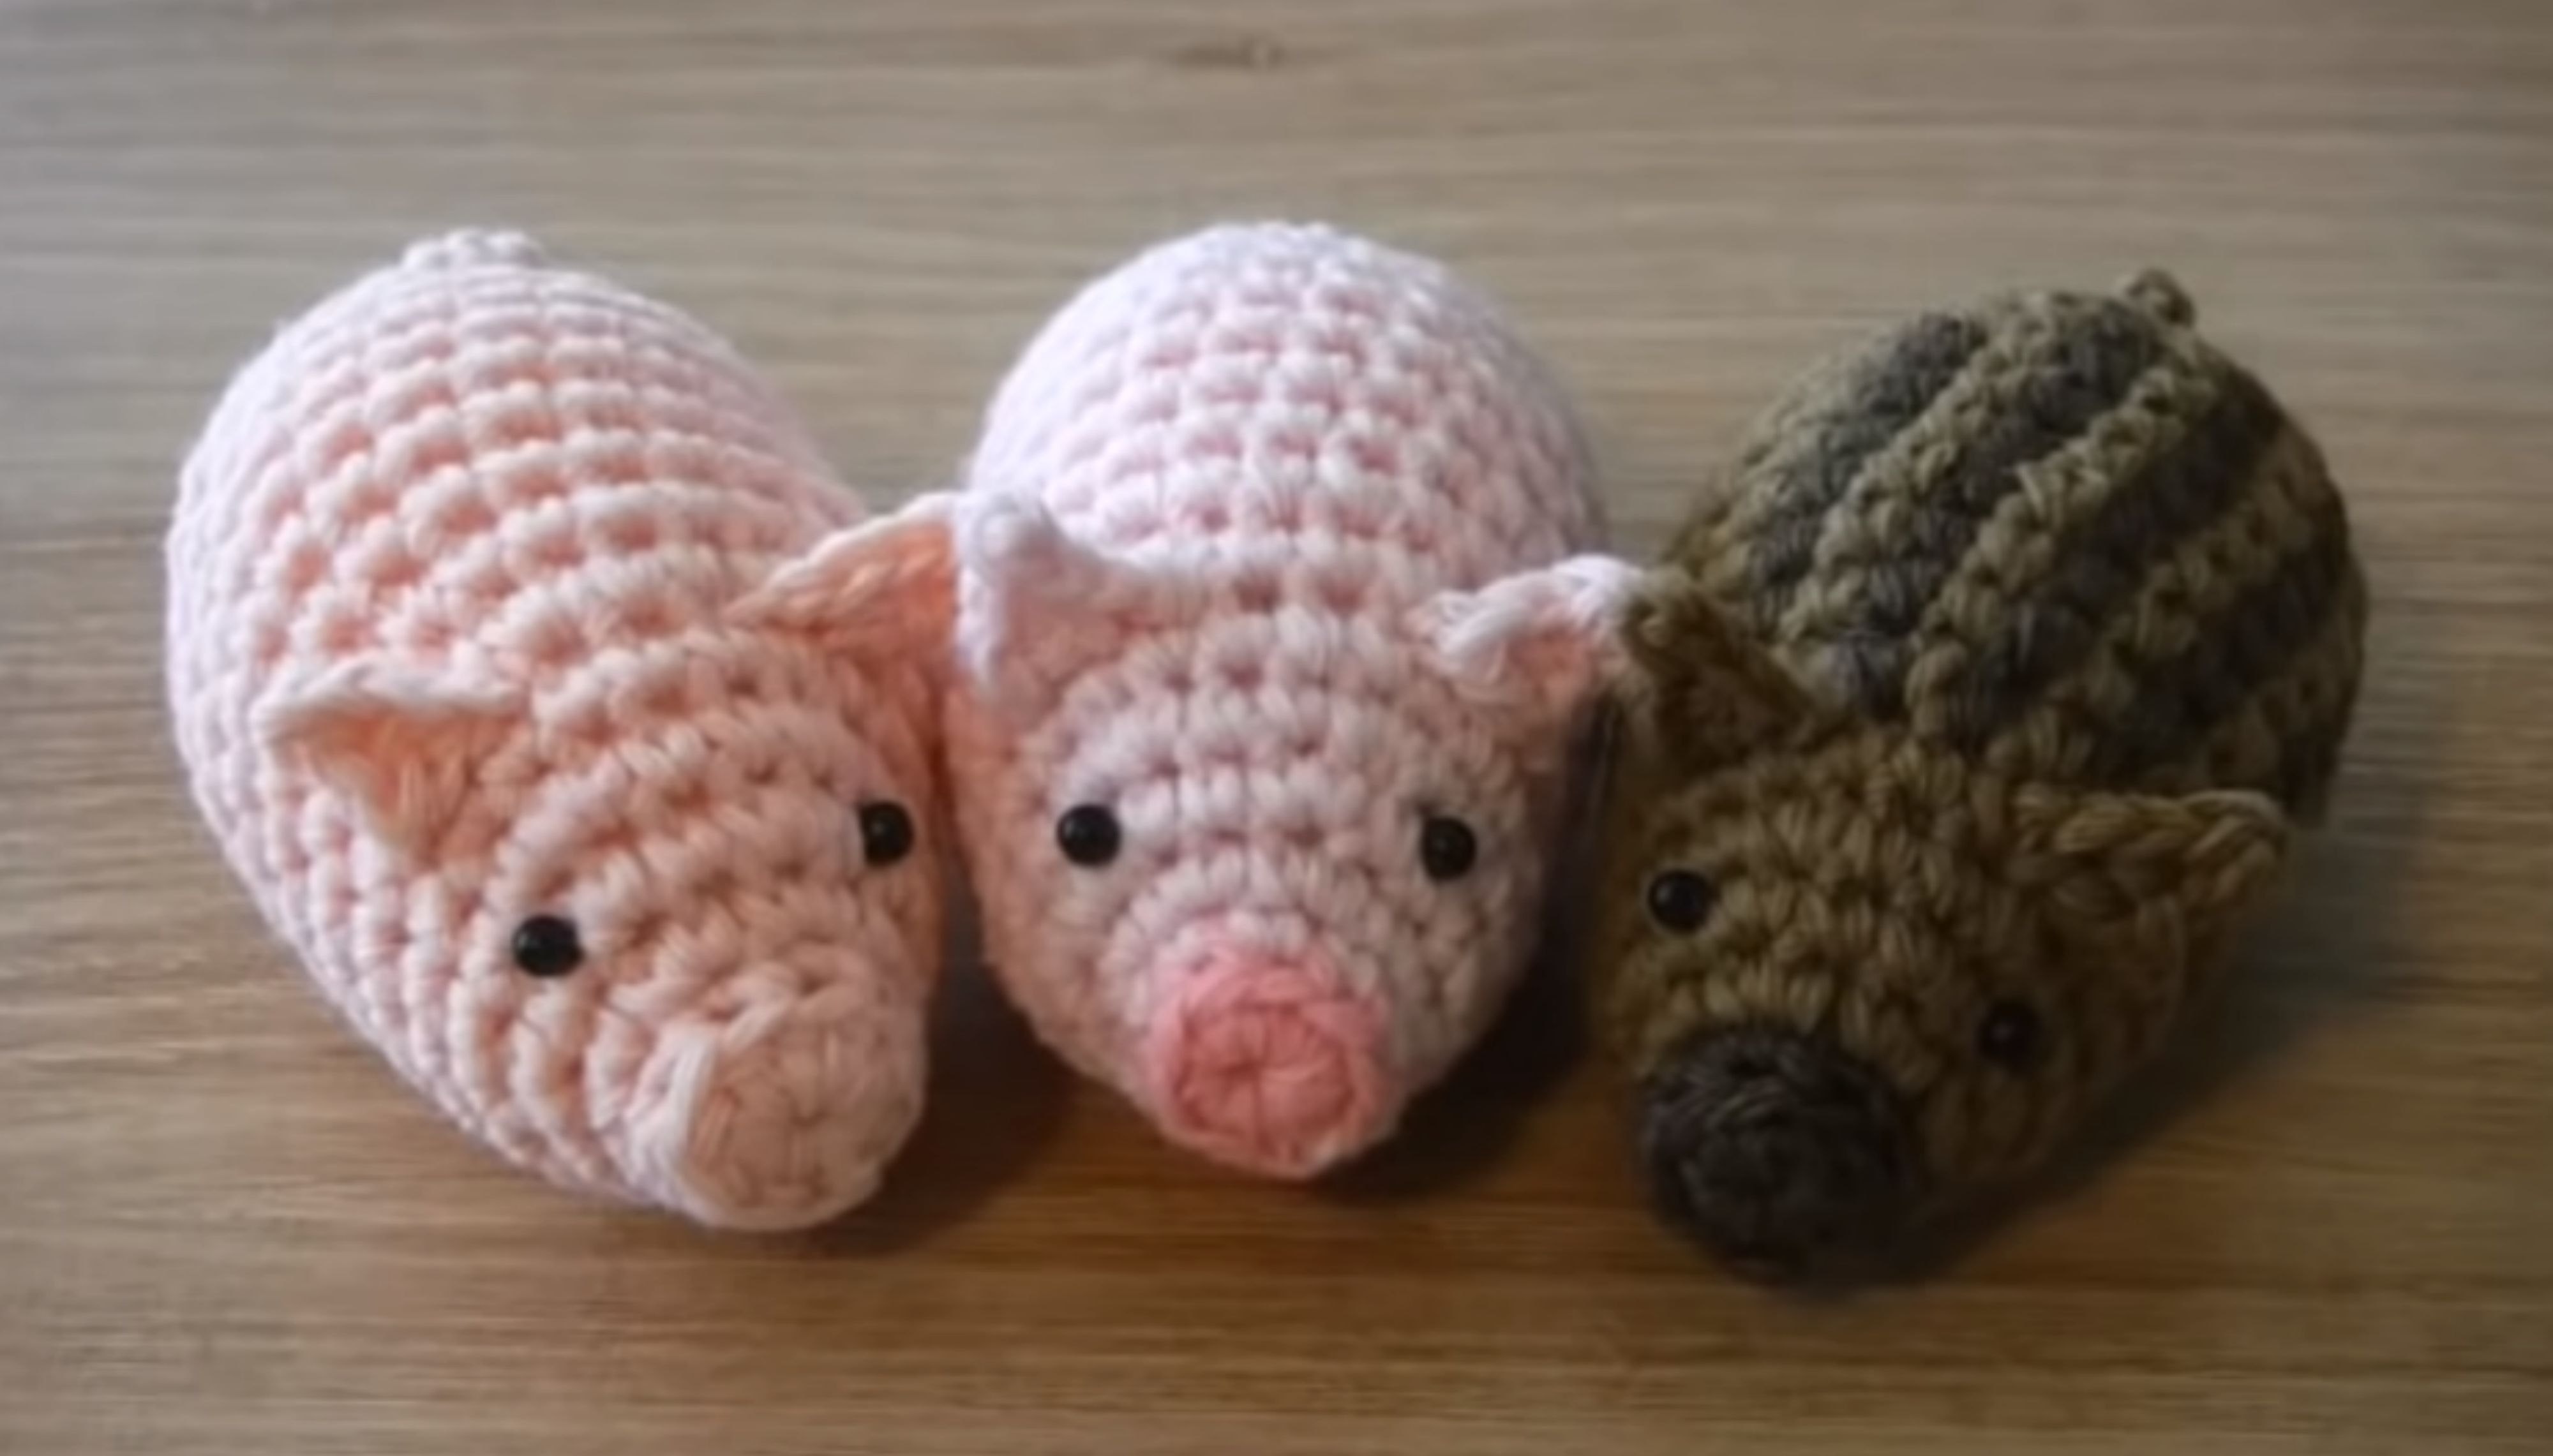 Pig Amigurumi Crochet Tutorial